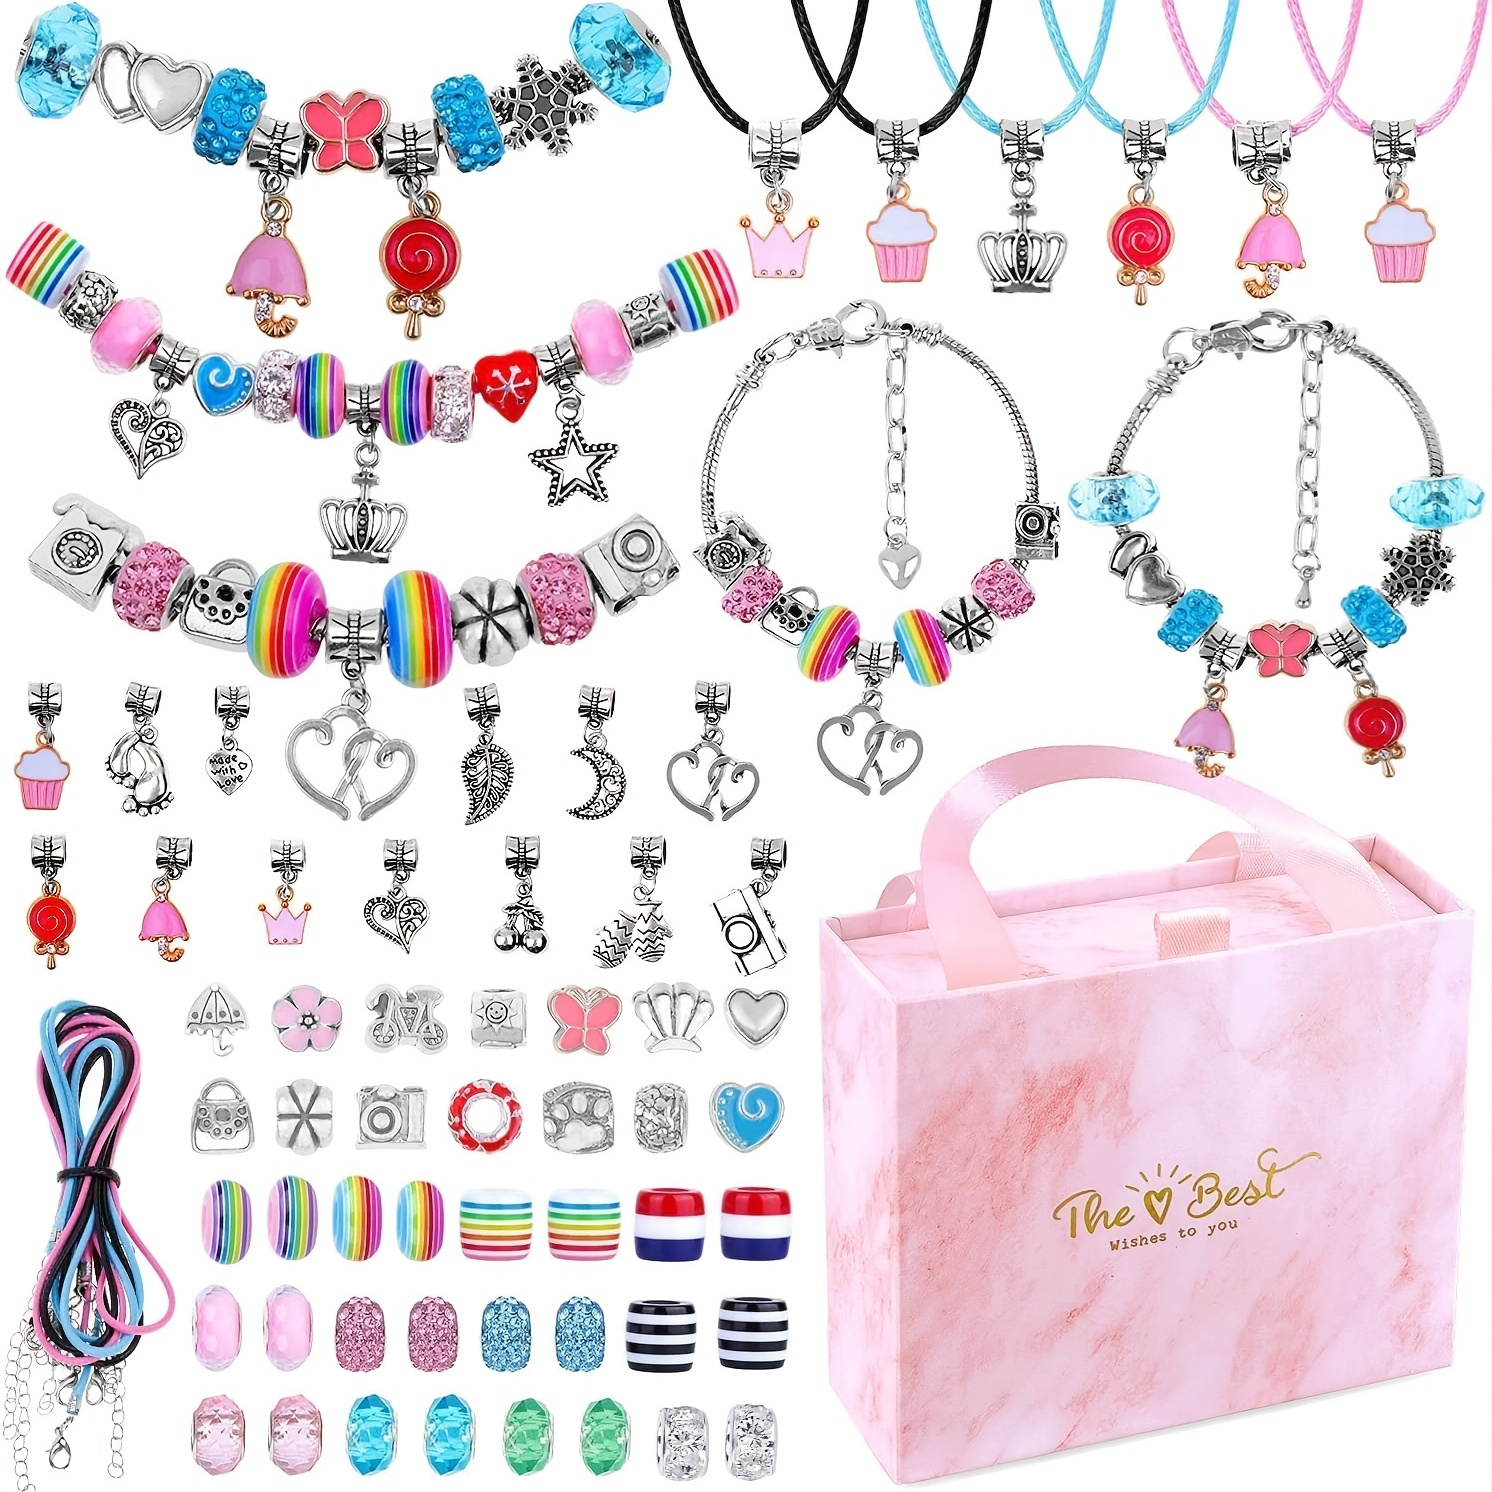 Mckanti 150 Pieces Charm Bracelet Making Kit for Girls, Charm Bracelets Jewelry Making Kit with Beads Bracelets Charms Necklace DIY Crafts Gifts Set